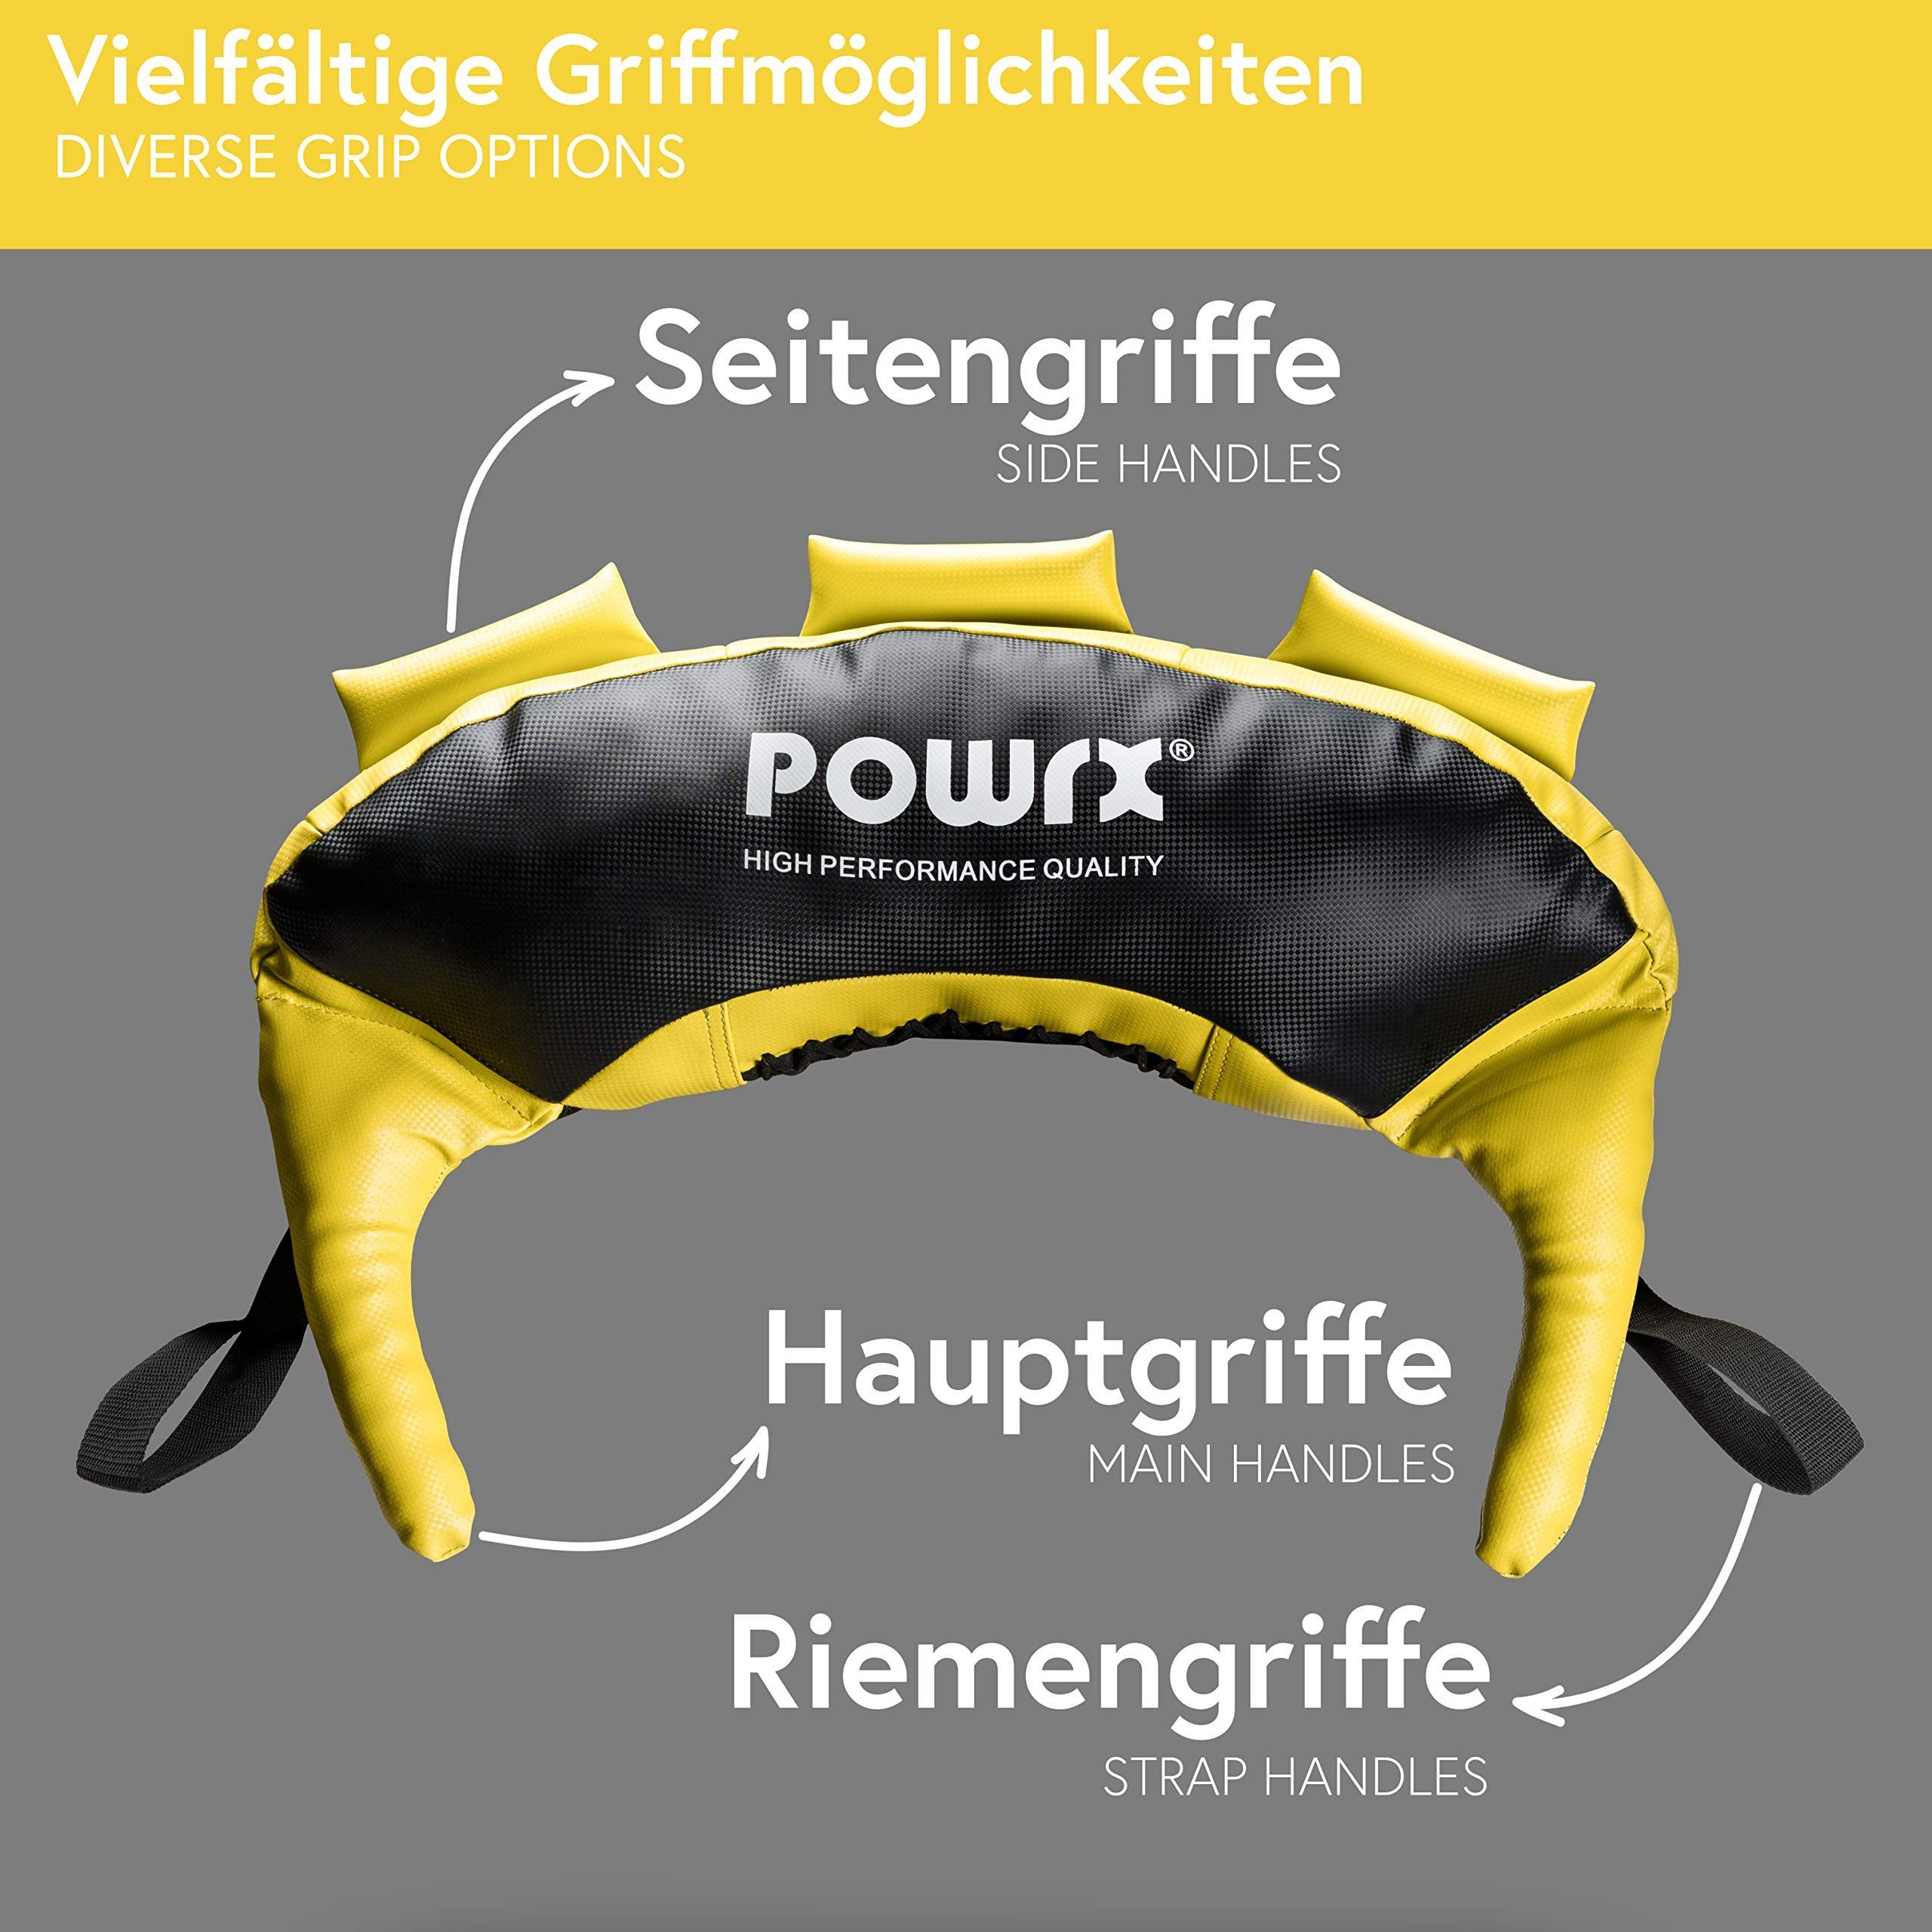 5-22 Gelb Kg kg Schwarz/ Functional Kunstleder Gewichtssack Gewichtsbag Fitness, f. 5 Schwarz/Gelb I POWRX I